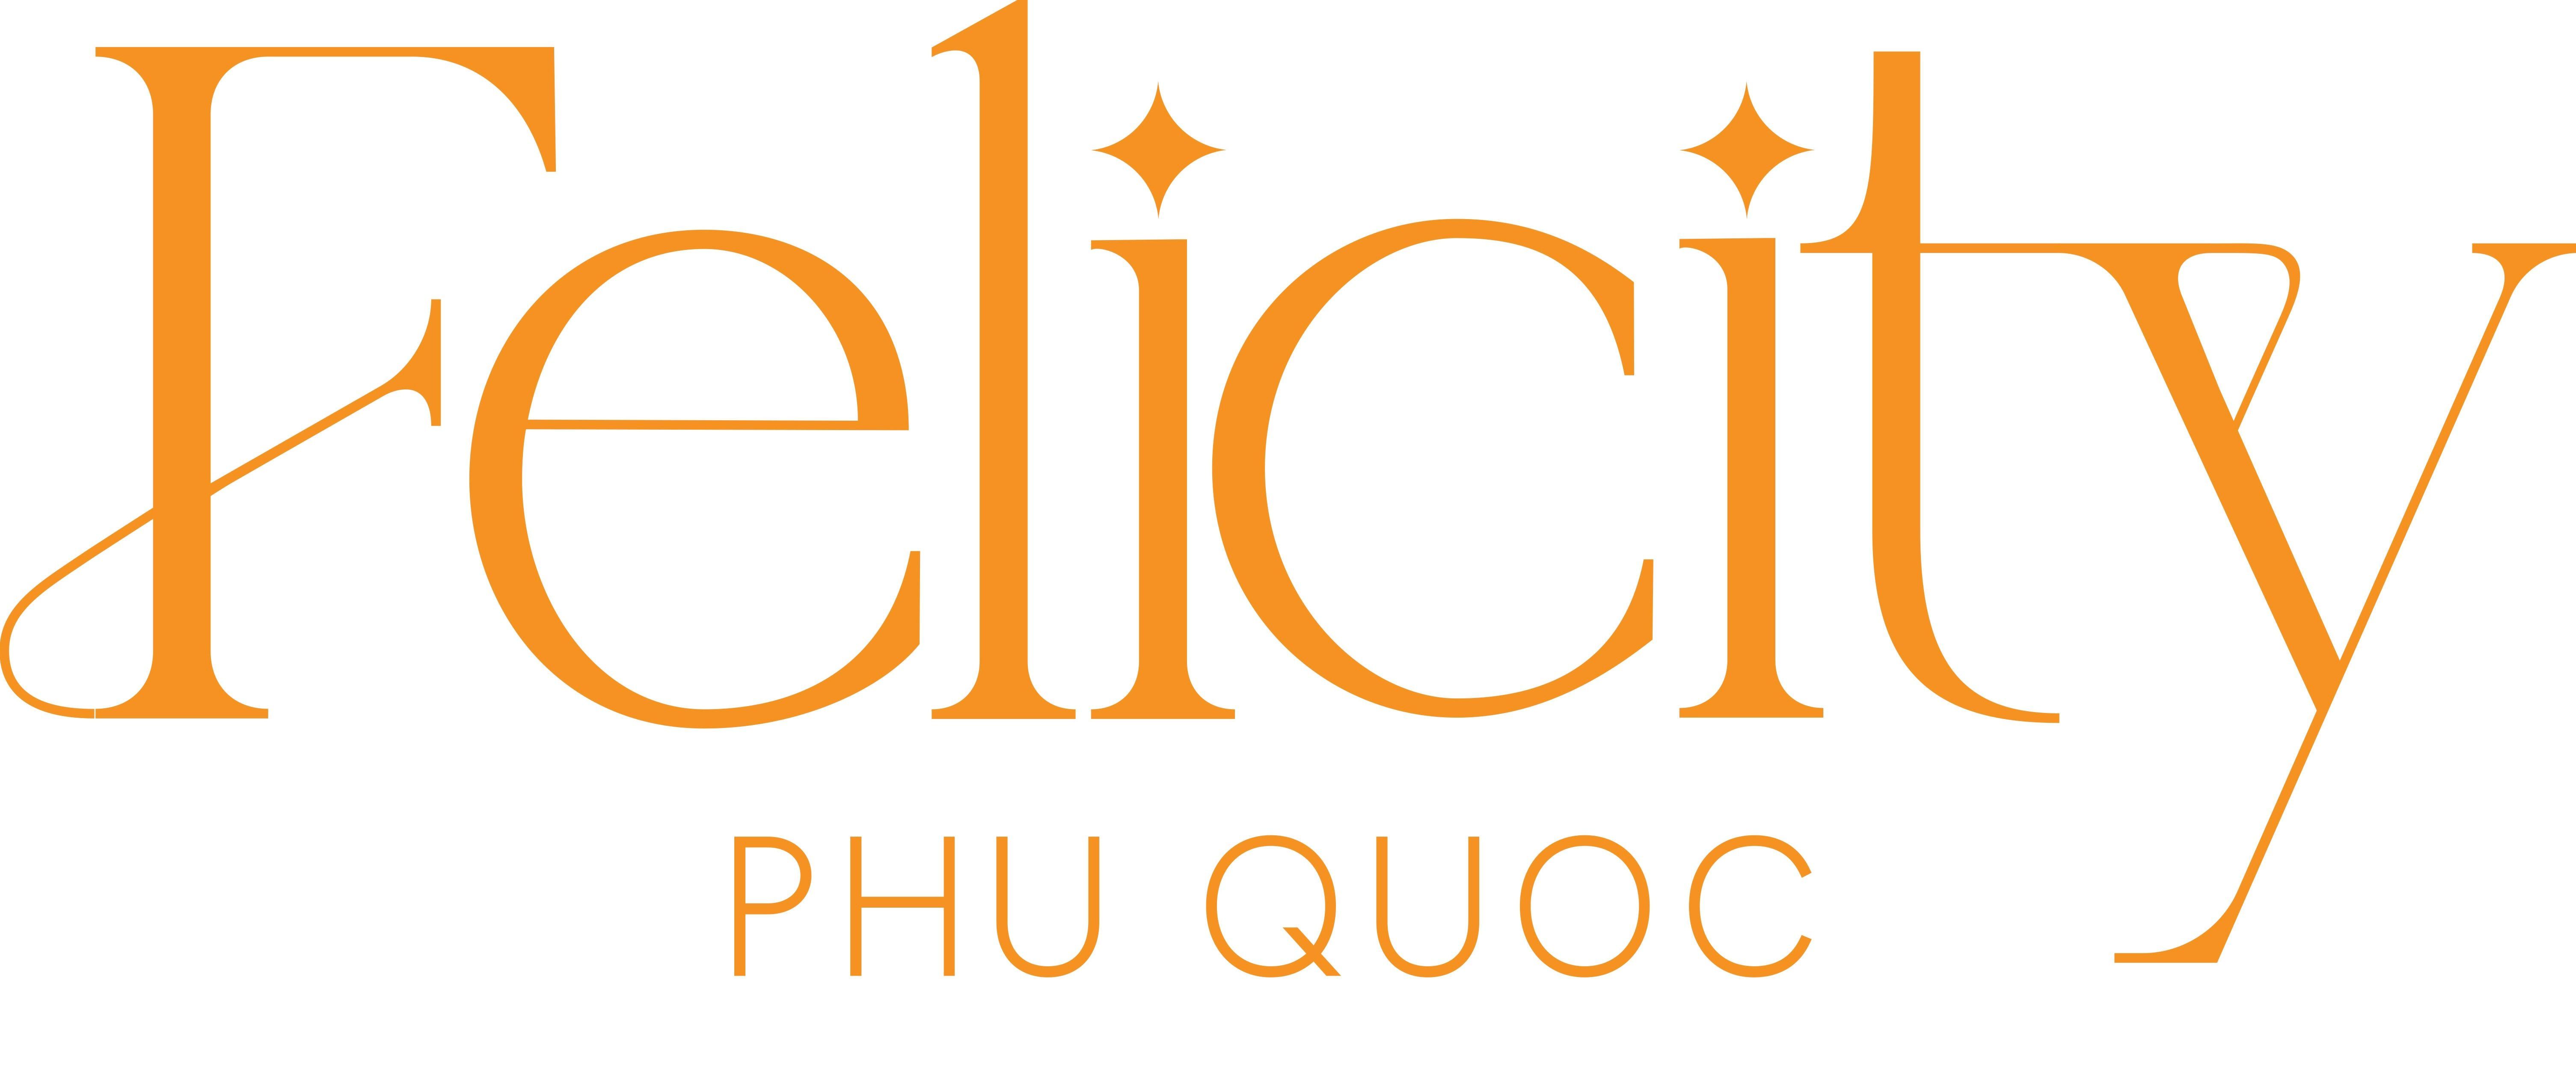 Logo-Felicity-2 2.jpg